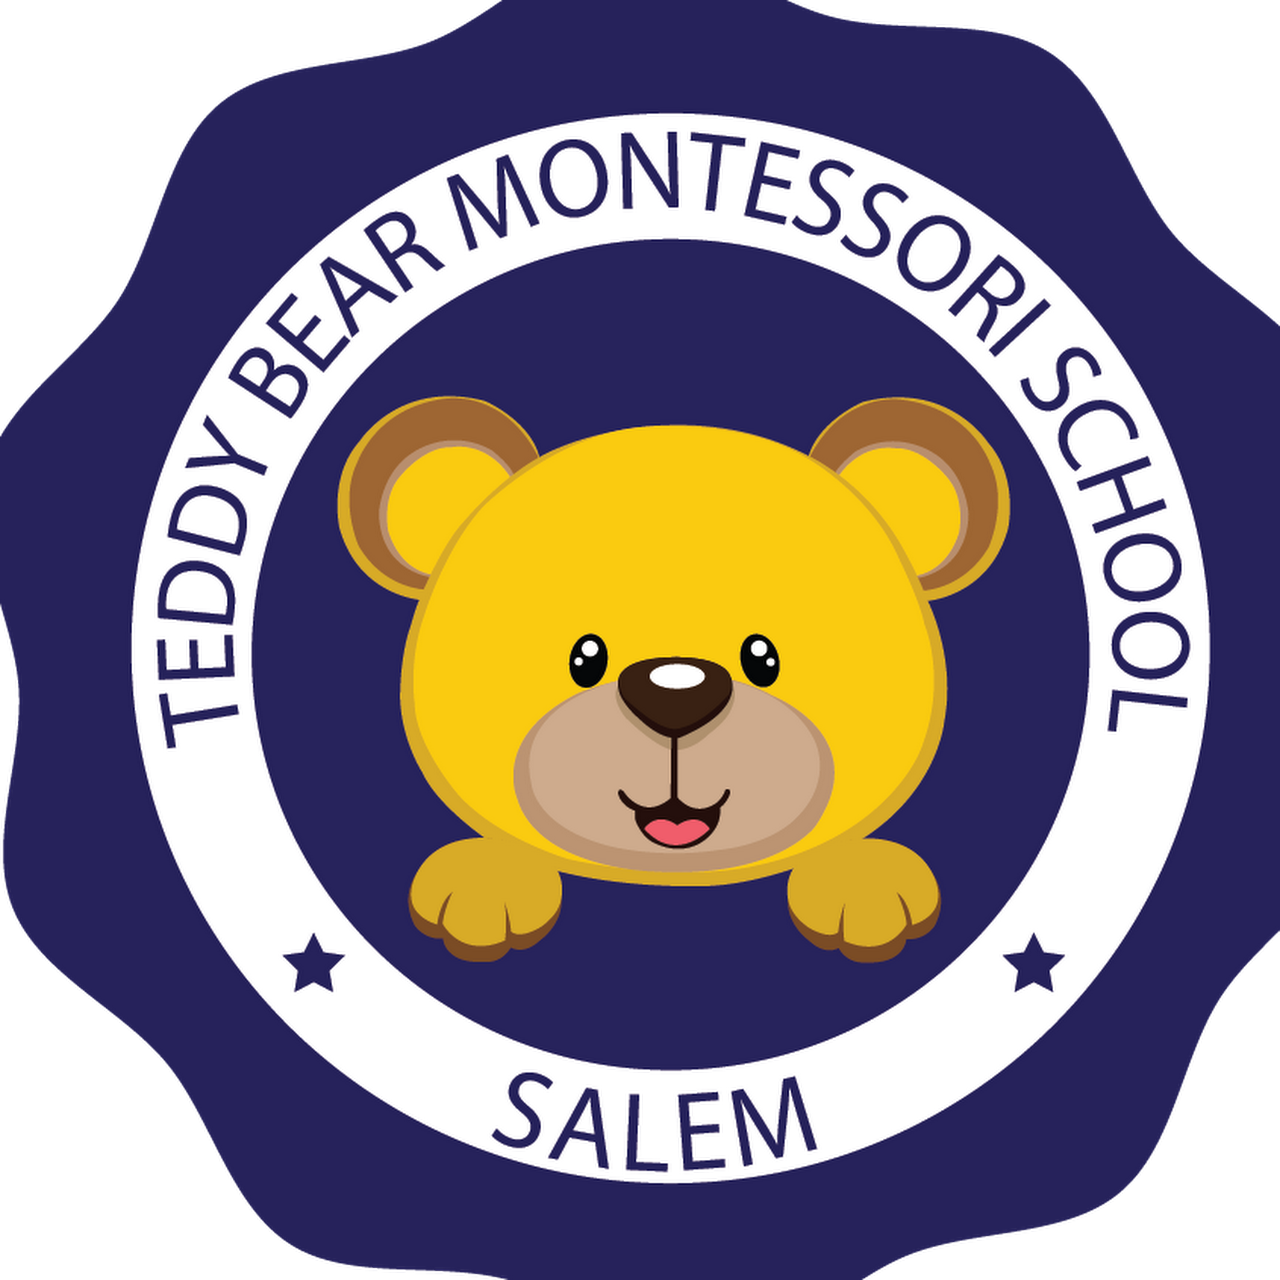 Teddy Bear Montessori School|Colleges|Education